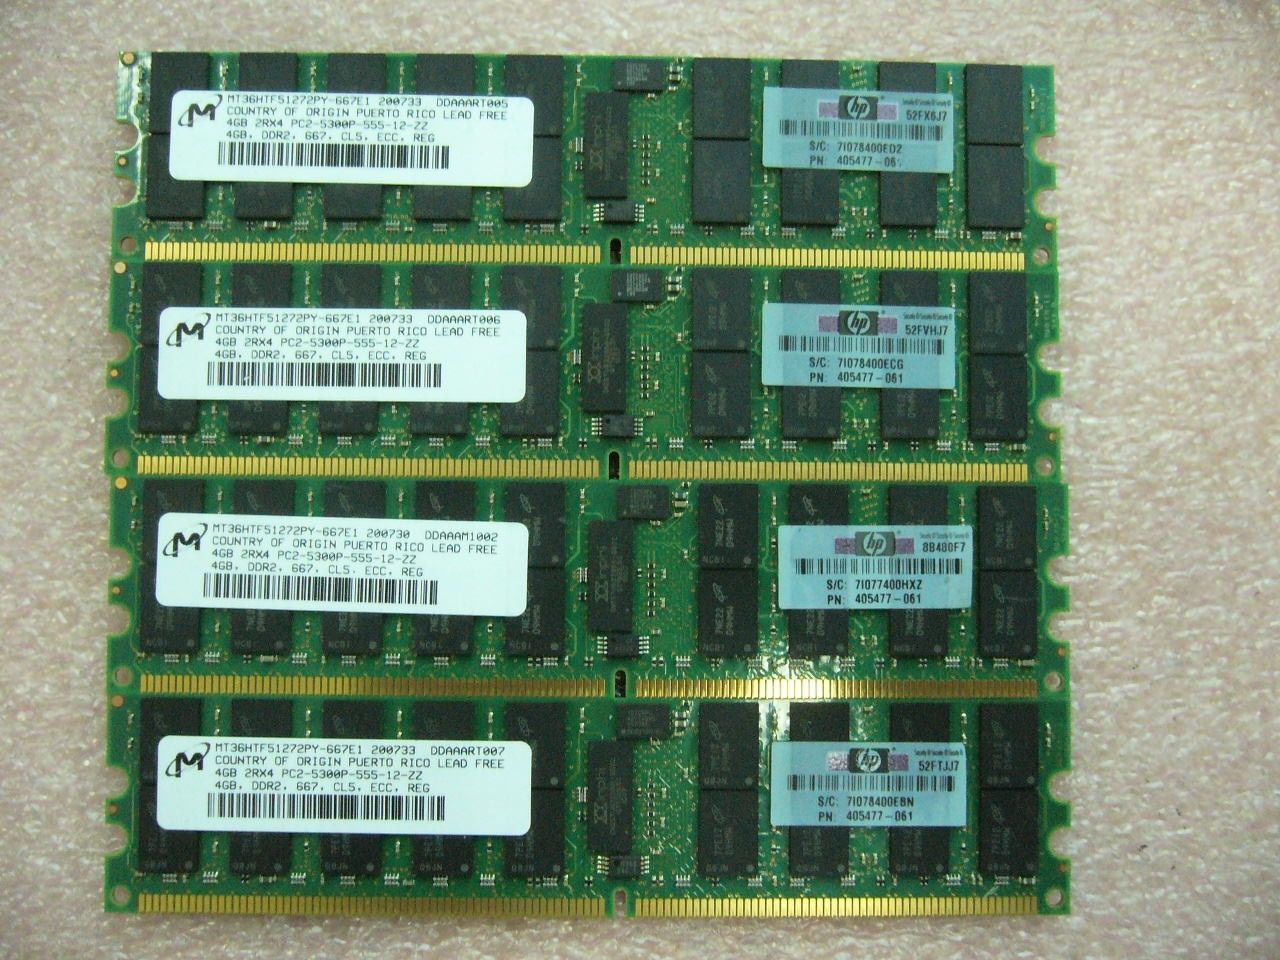 QTY 1x 4GB PC2-5300P 2Rx4 DDR2 677MHz ECC Registered Memory HP P/N 405477-061